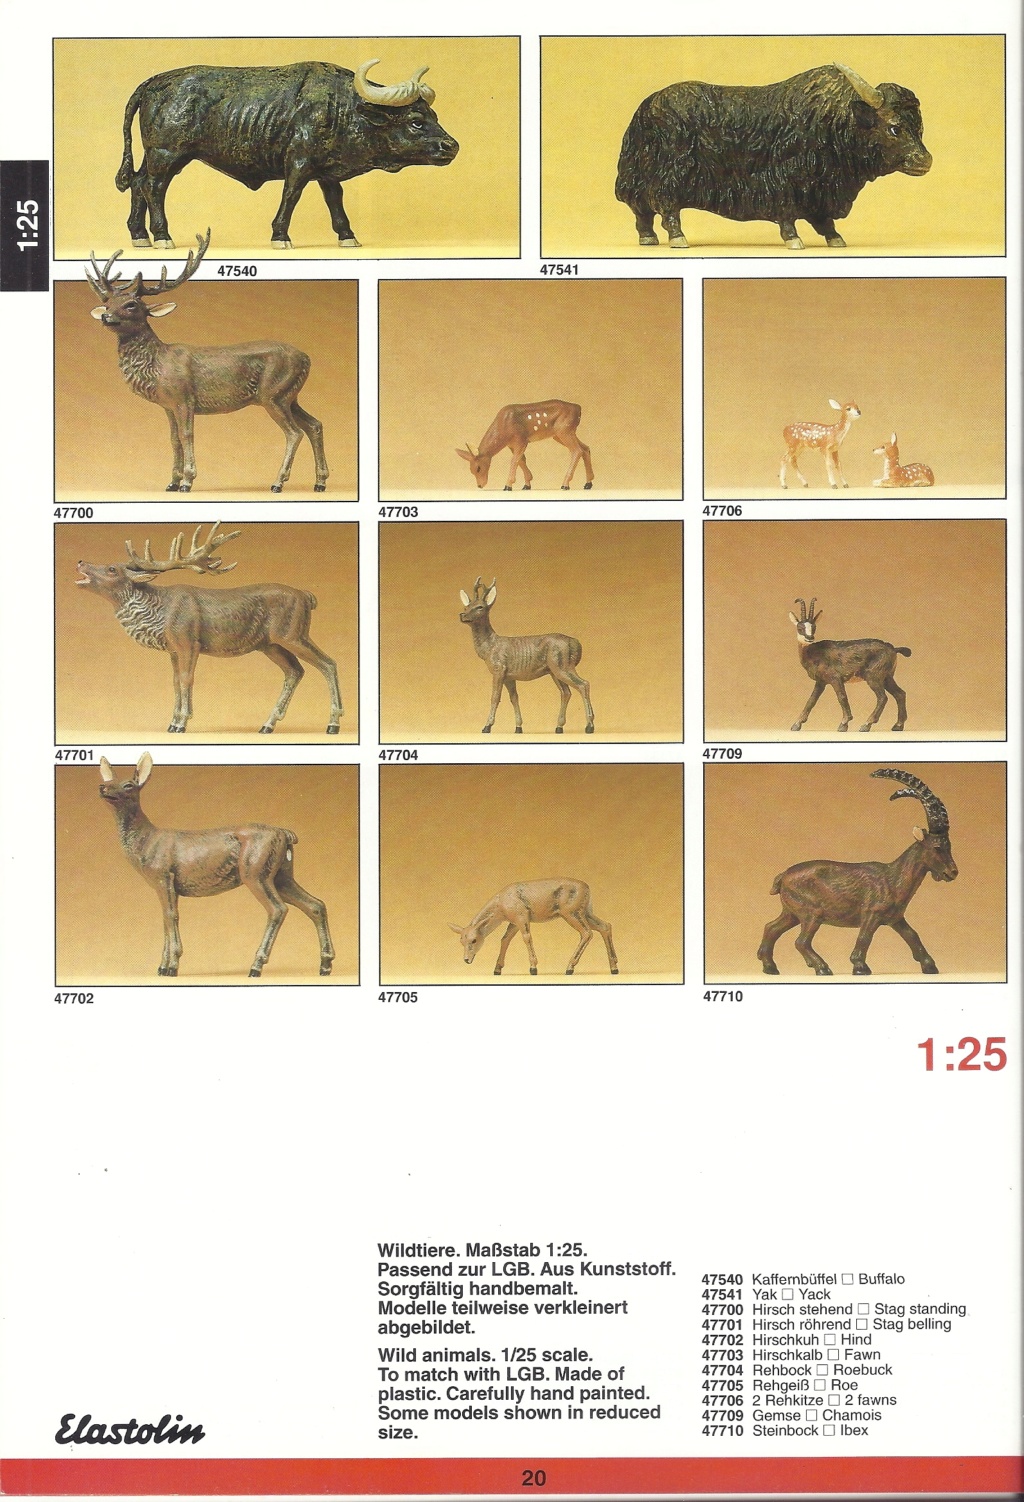 [PREISER 1996] Catalogue elastolin 1996 Preis163